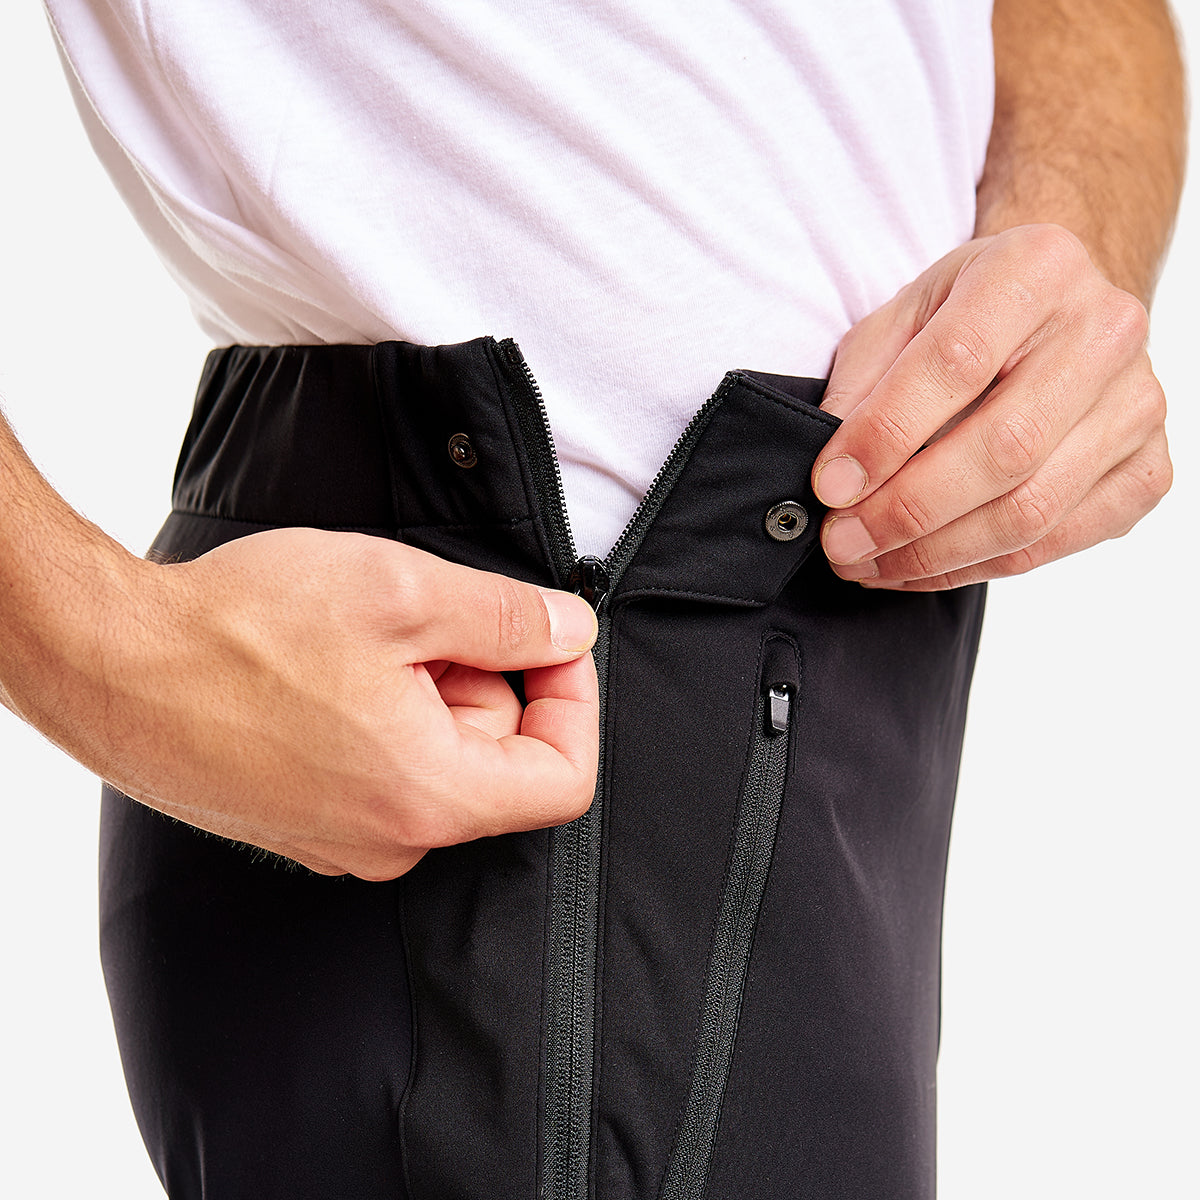 MEN'S HYBRID STRETCH WOVEN PANT, Performance Black, Pants & Tights